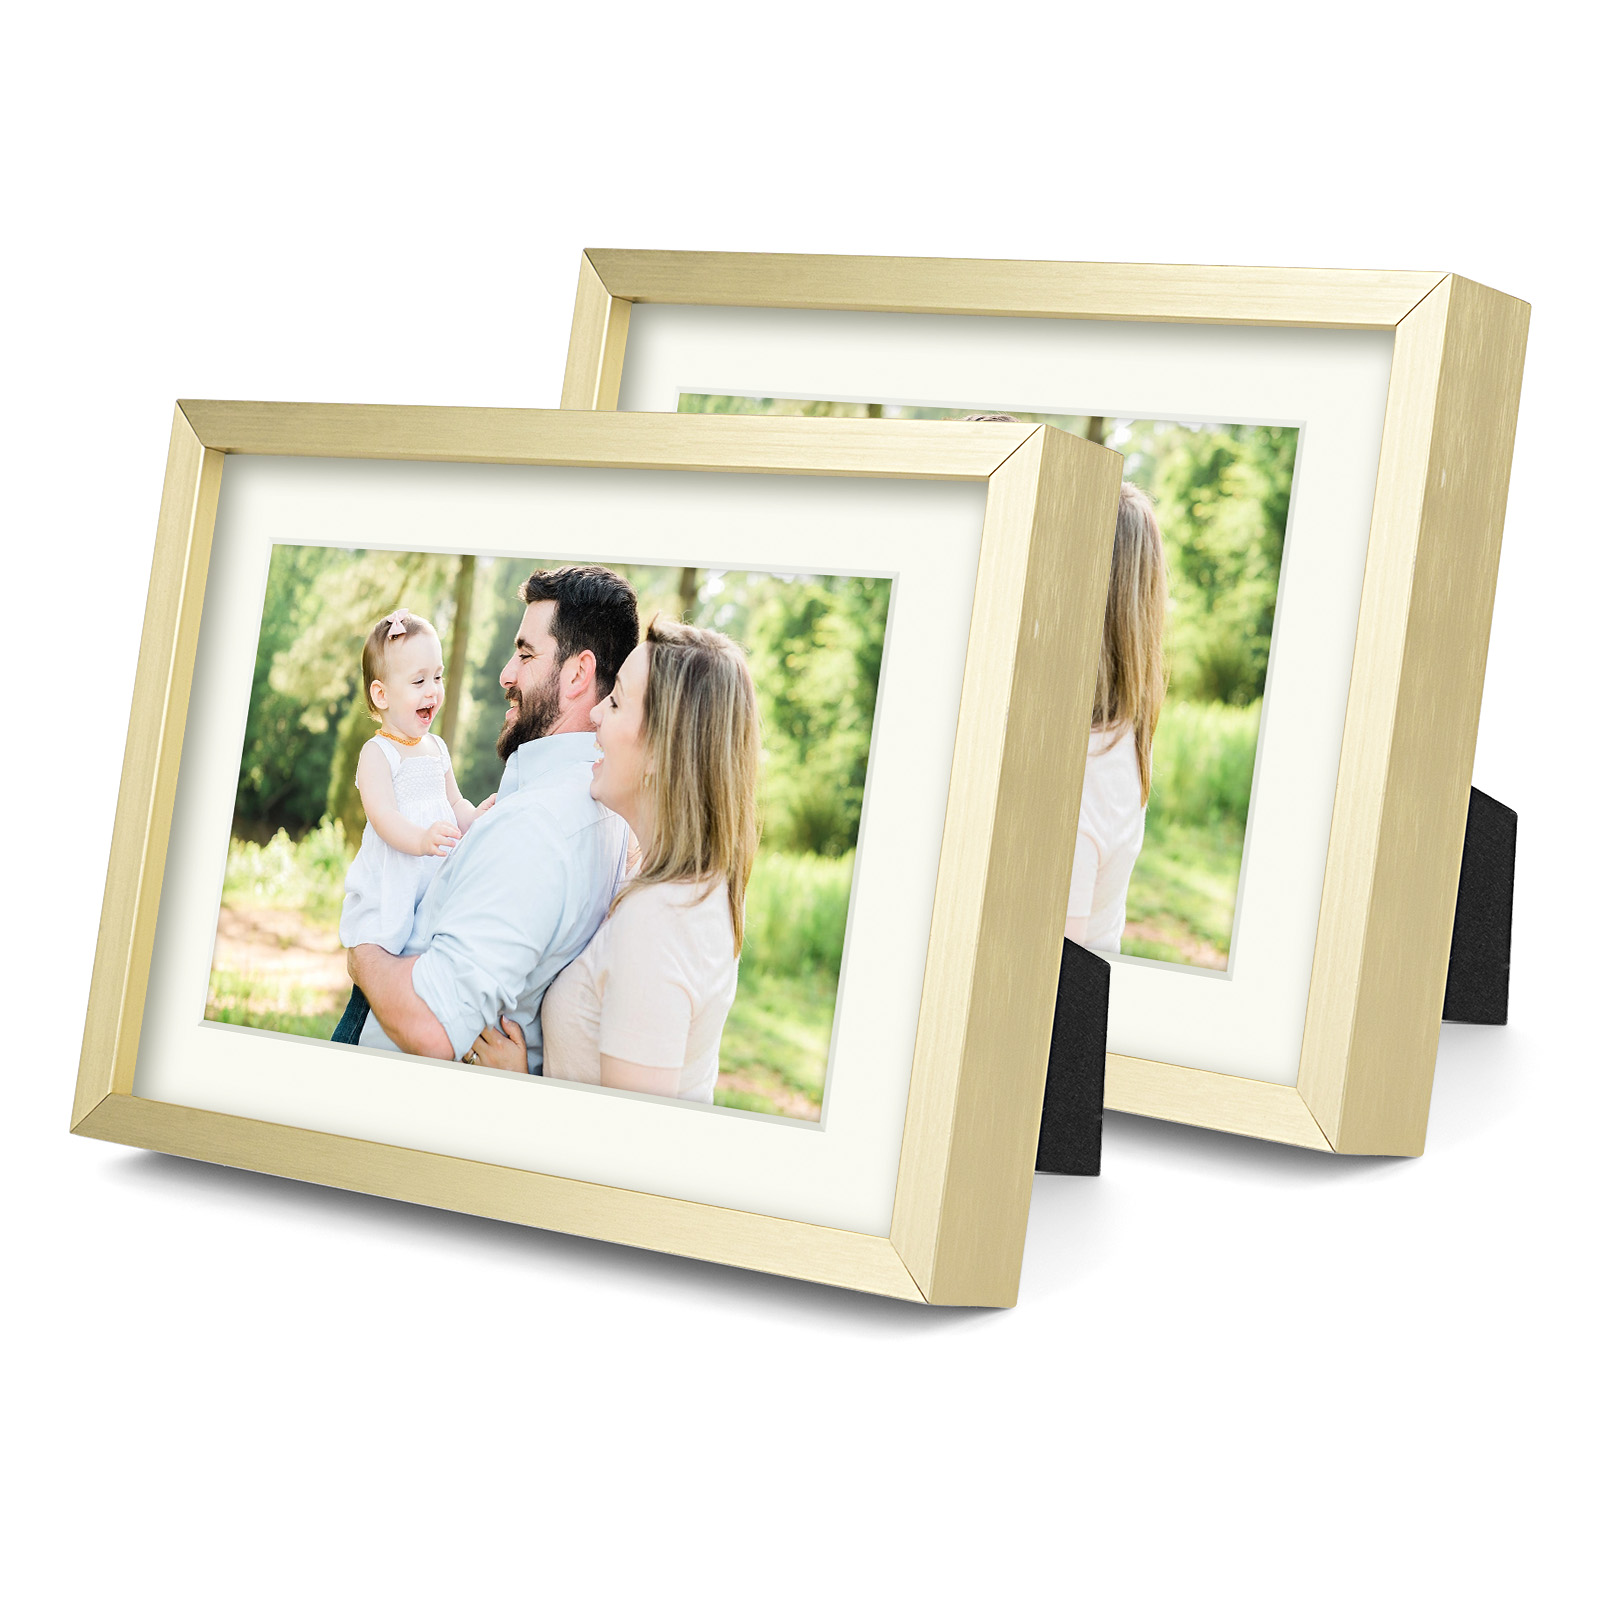 8x10 Frame for 5x7 Picture Rose Gold Aluminum (8 Pcs per Box)